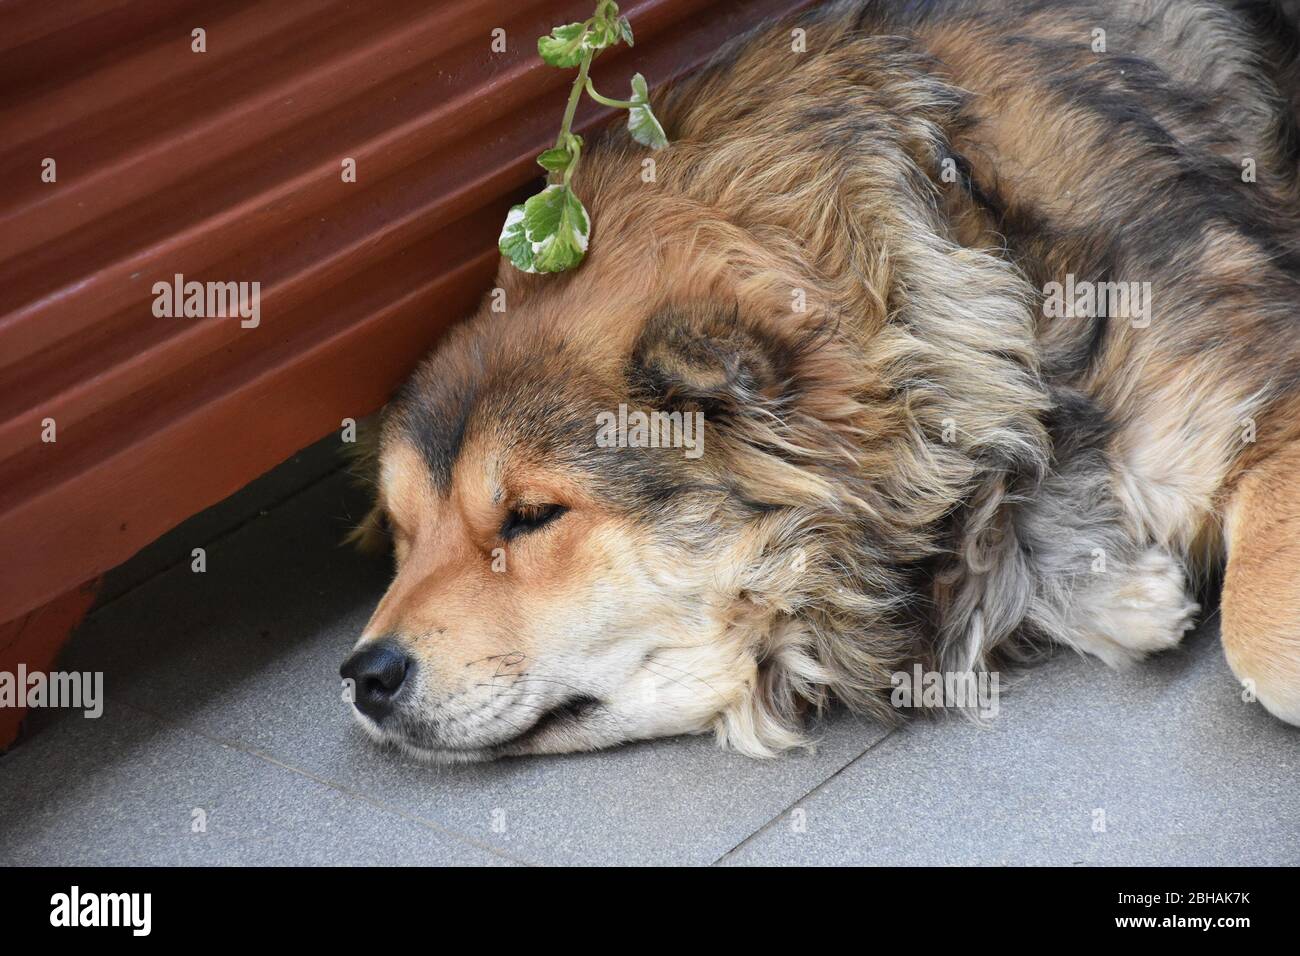 The head of a sleeping dog on a tile Stock Photo